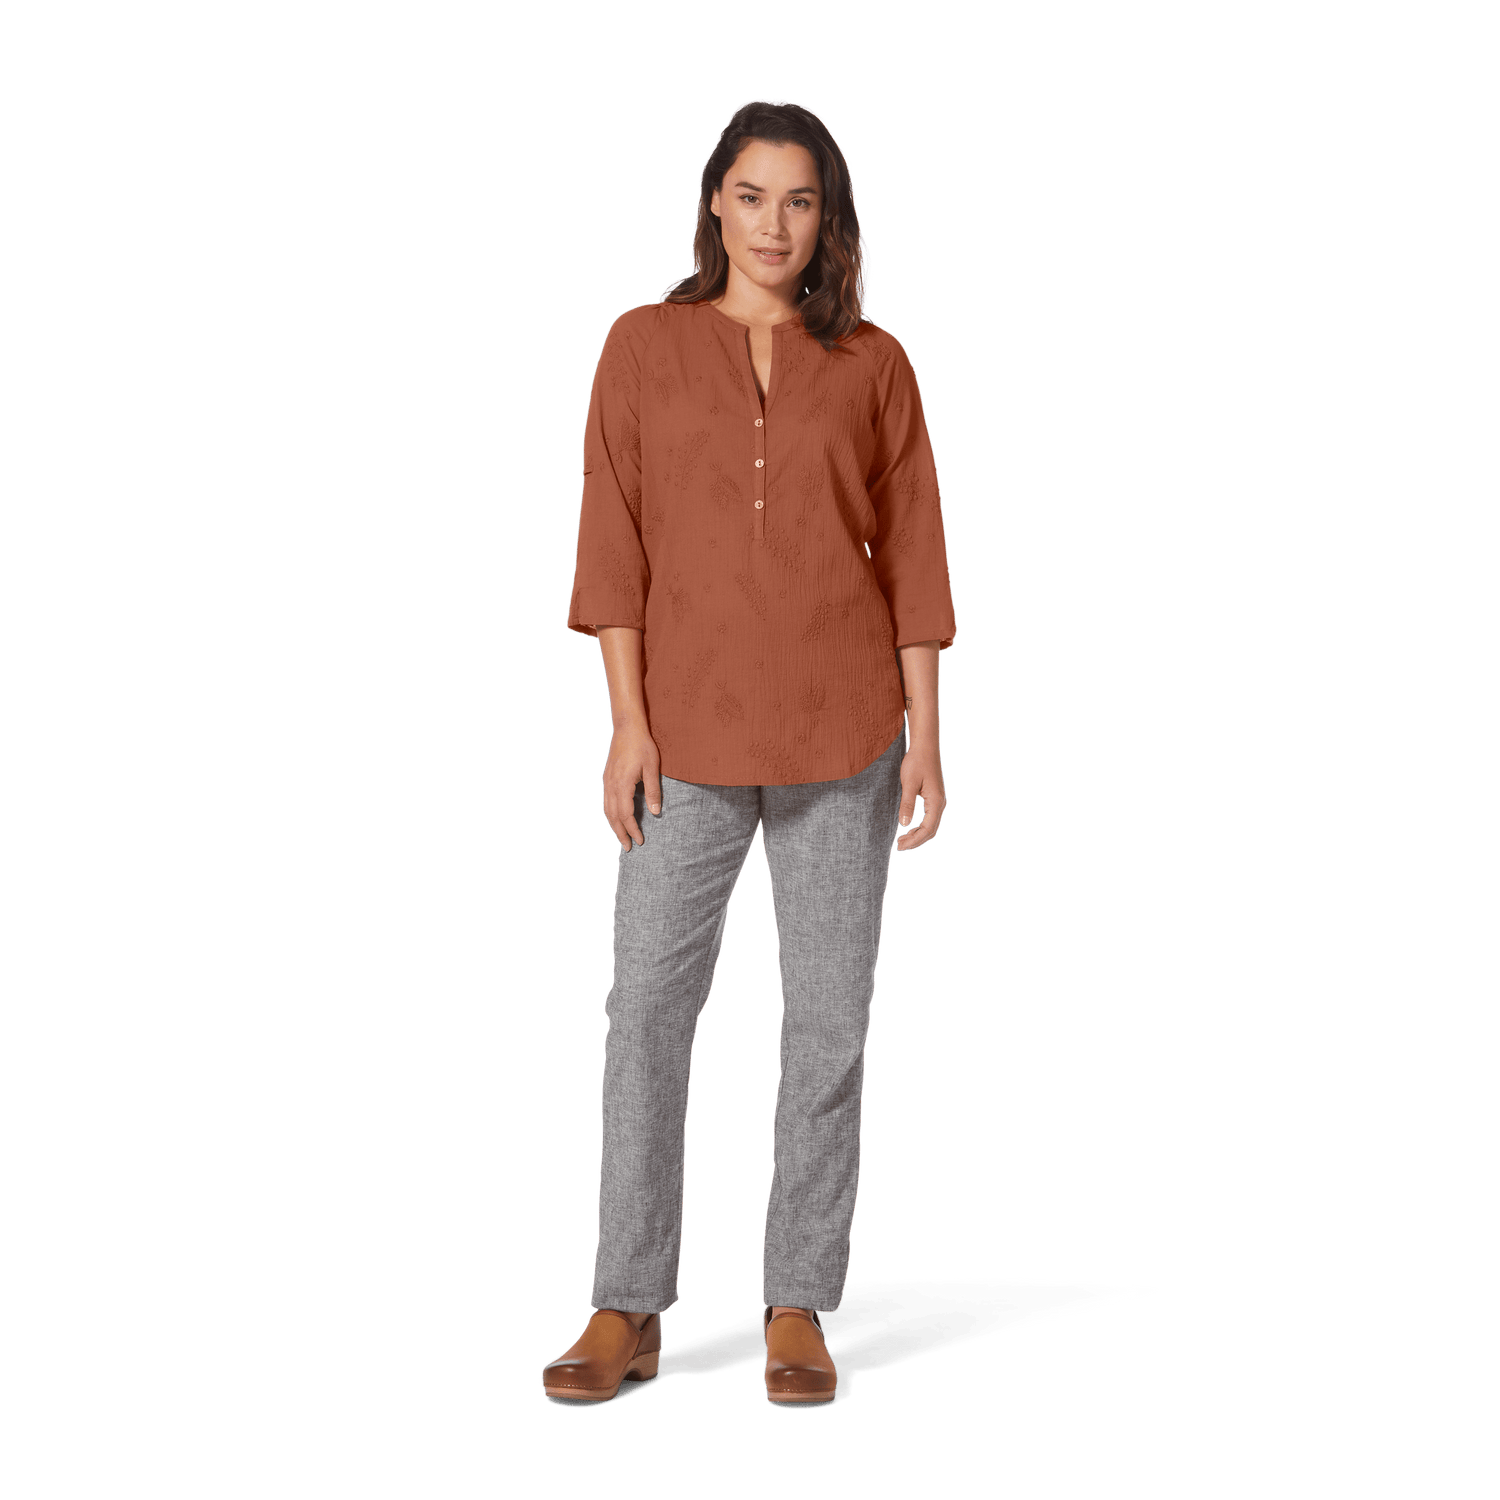 Royal Robbins W's Oasis II 3/4 Sleeve - Preferred cotton Baked Clay Shirt